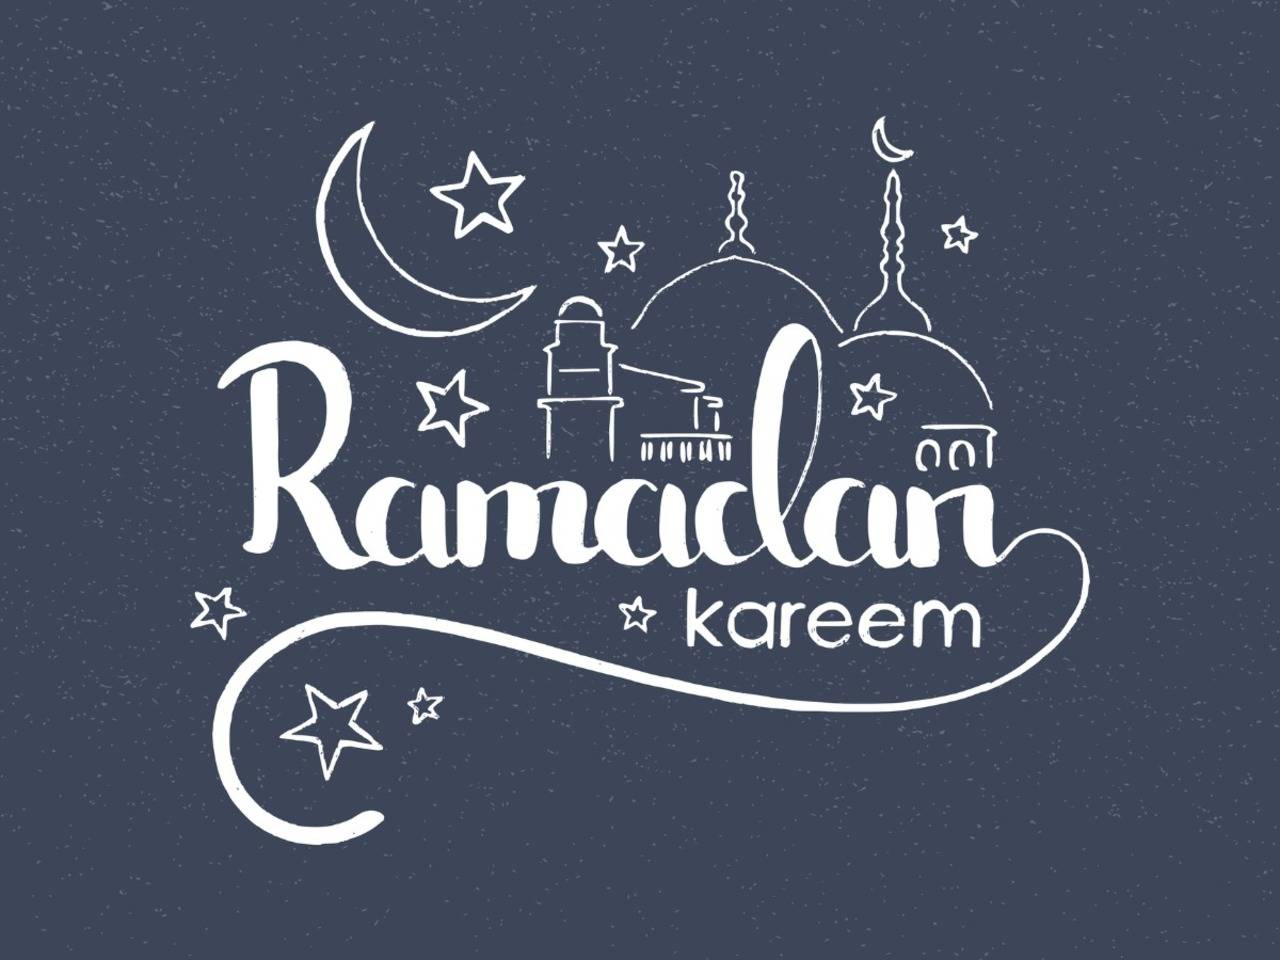 Amazing Collection of Full 4K Ramadan Mubarak Images – Over 999+ Top Ramadan Mubarak Images